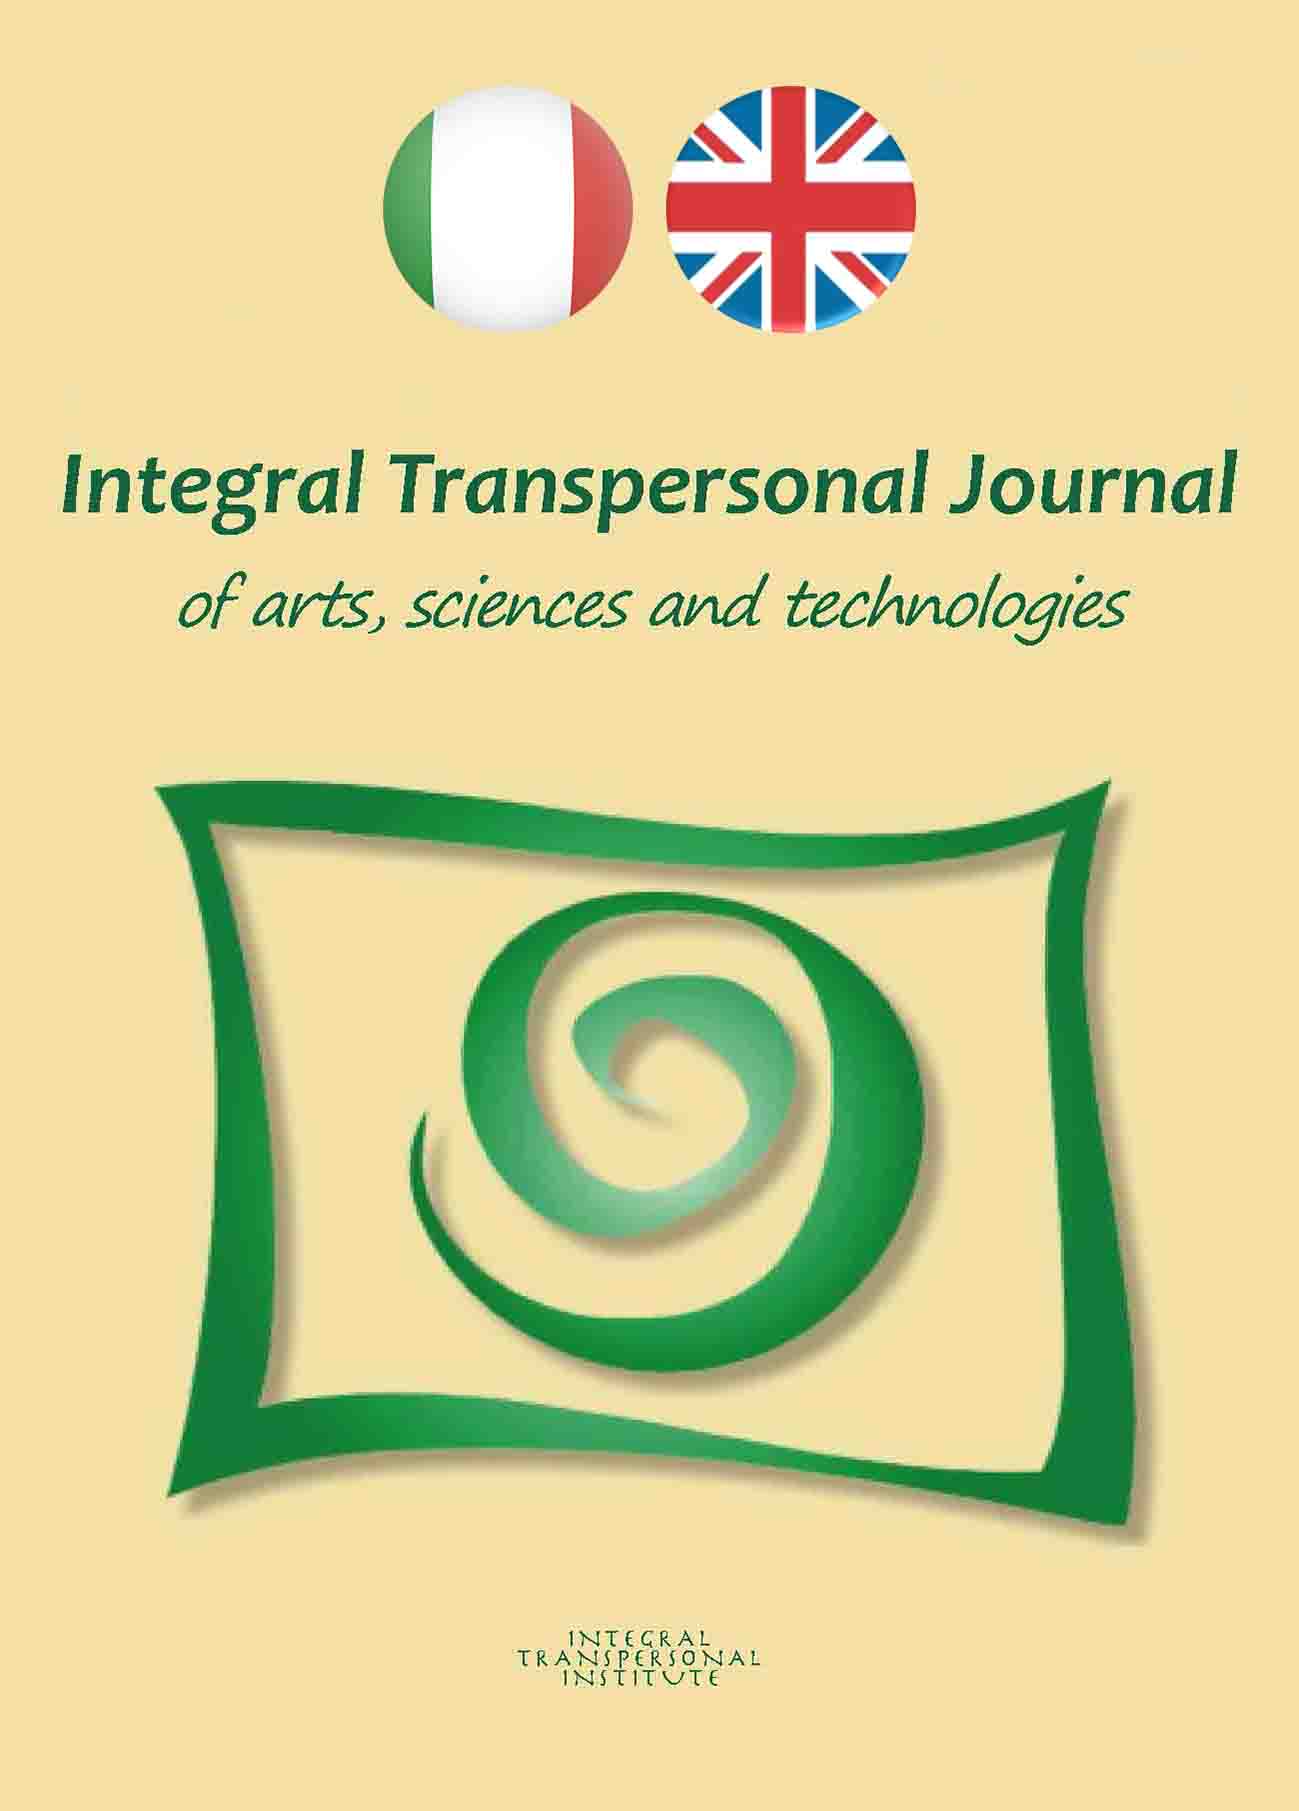 Integral Transpersonal Journal (ITJ) n. 0